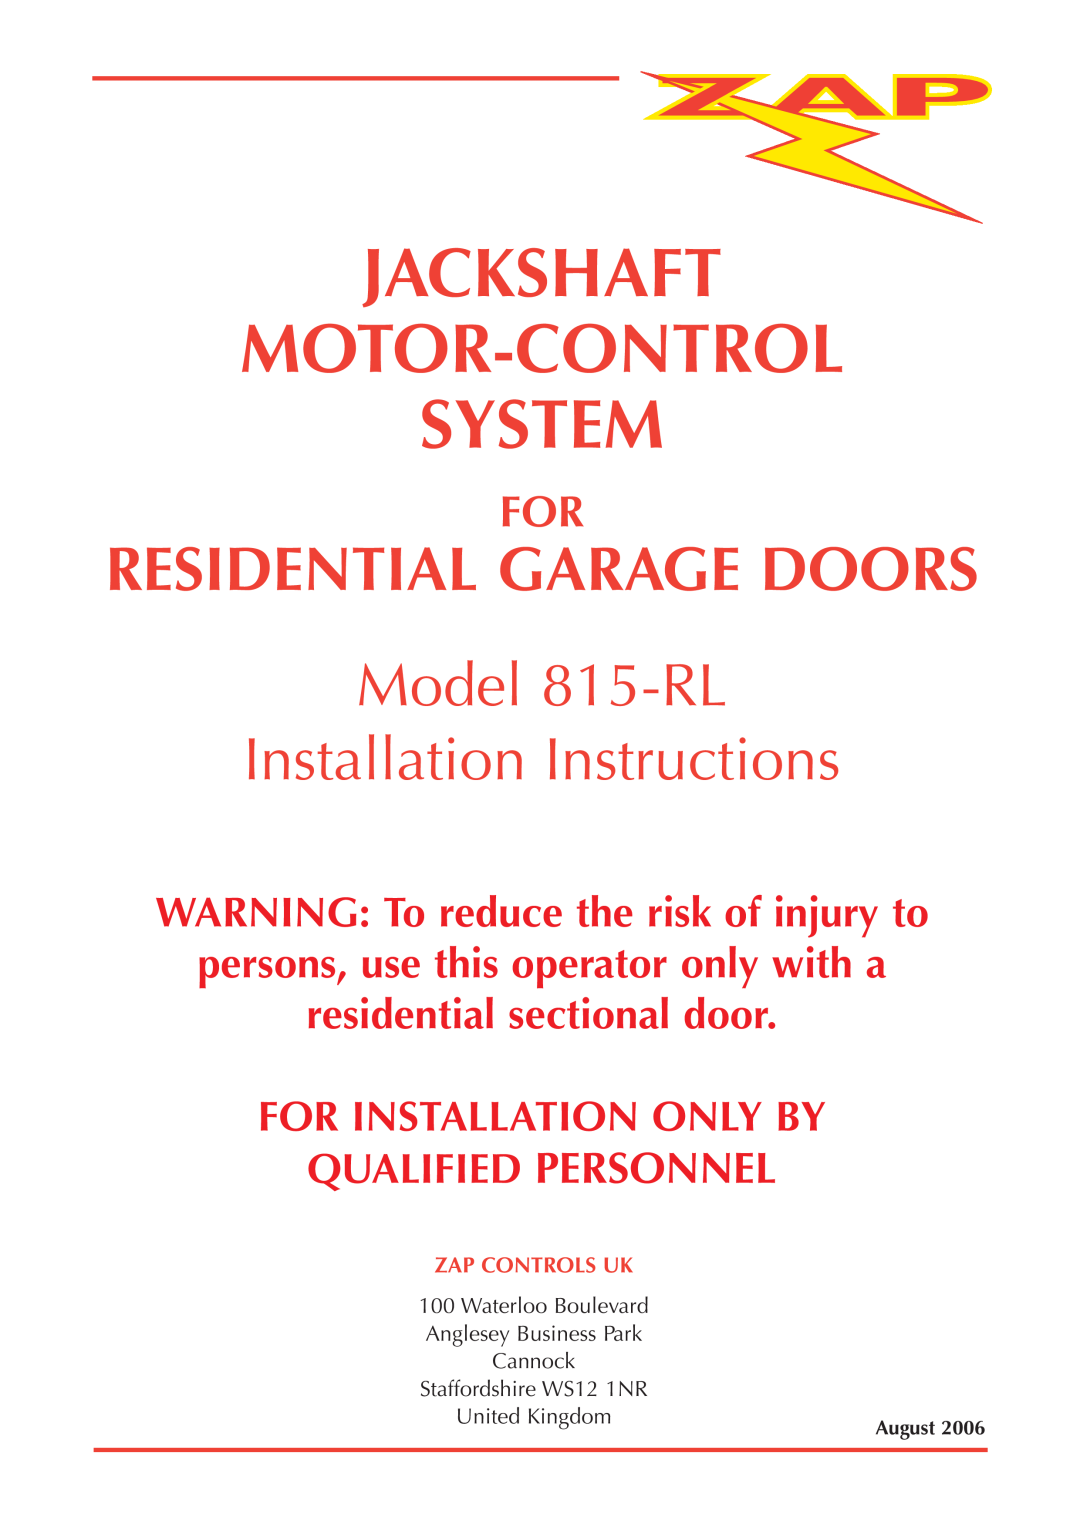 Zap 815-RL installation instructions Jackshaft Motor-Control System, Residential Garage Doors, residential sectional door 